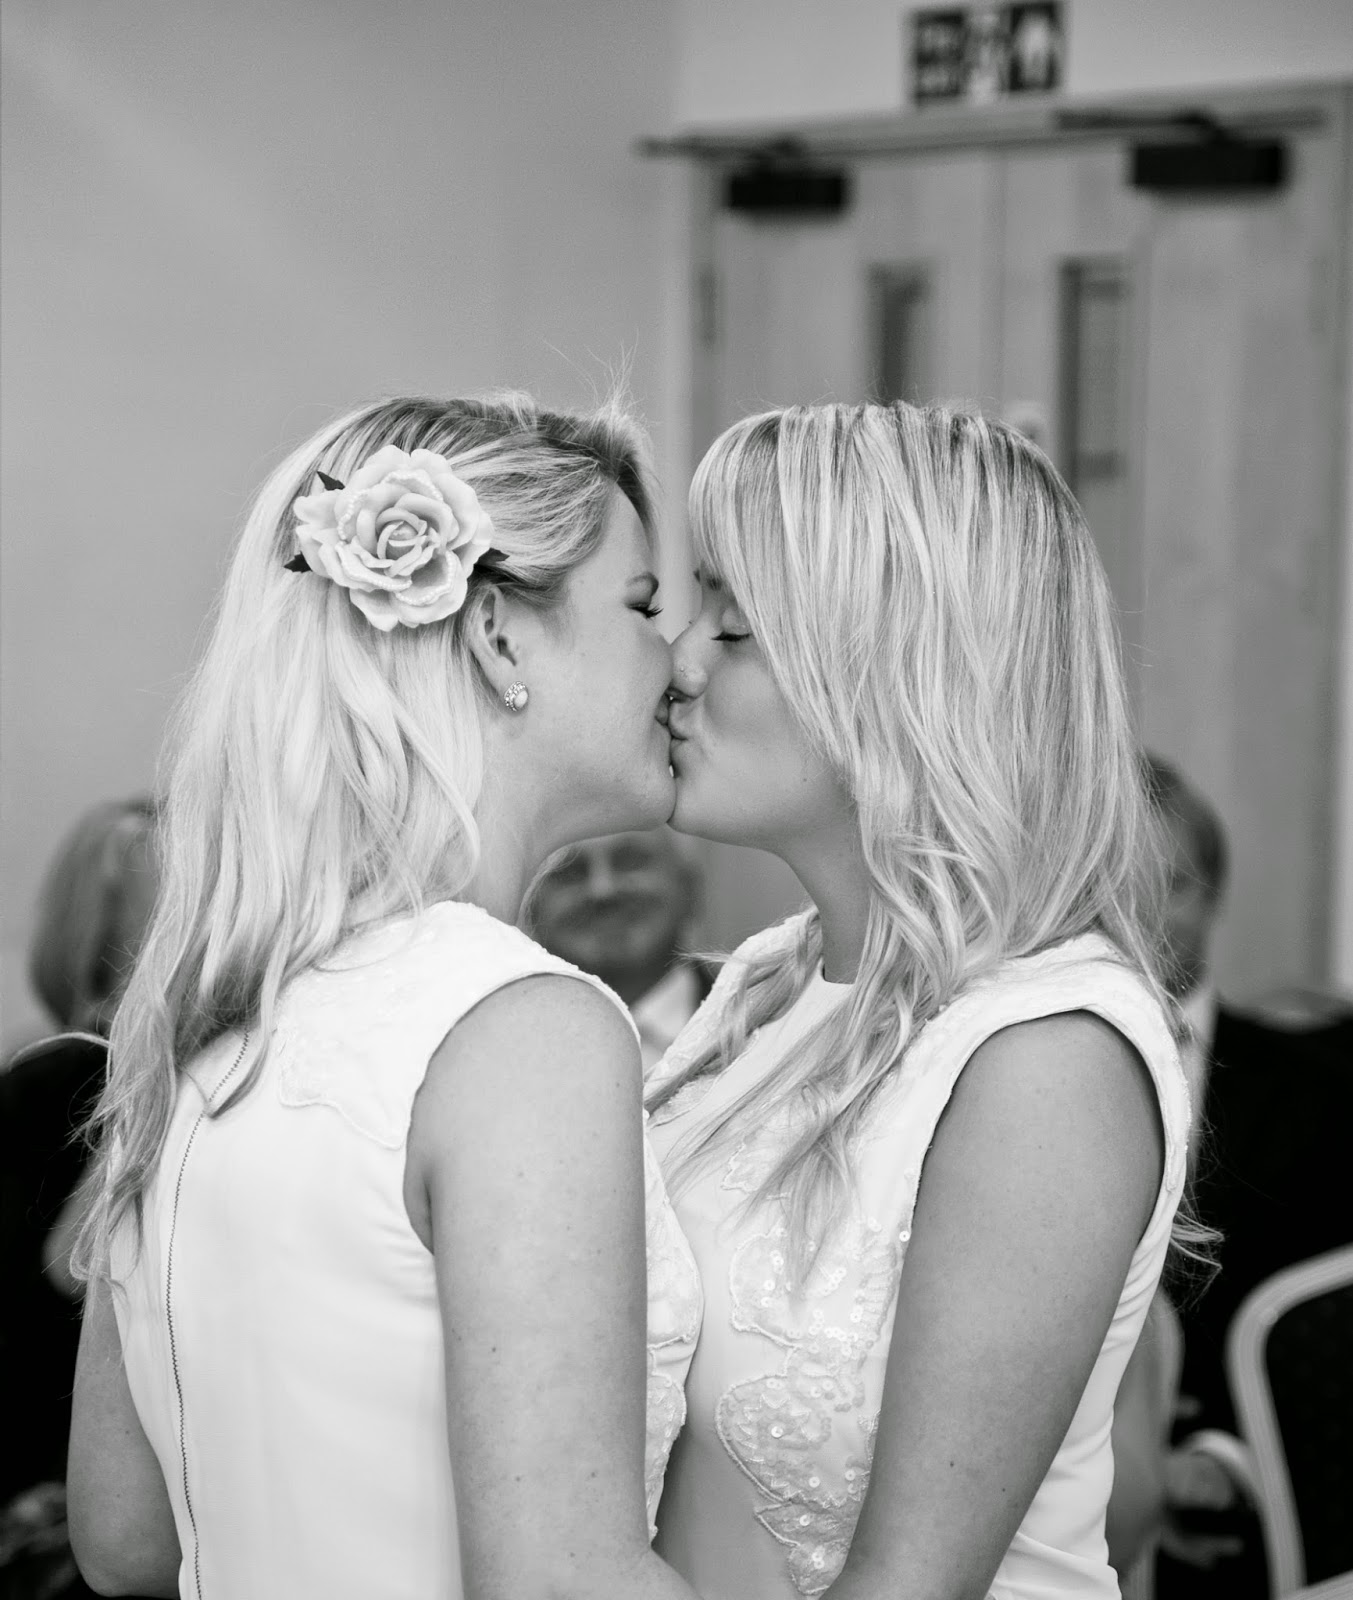 La lesbians. Две блондинки поцелуй. 2 Блондинки. Блондинки-невесты-лесбиянки. Лесбийская прическа белая.